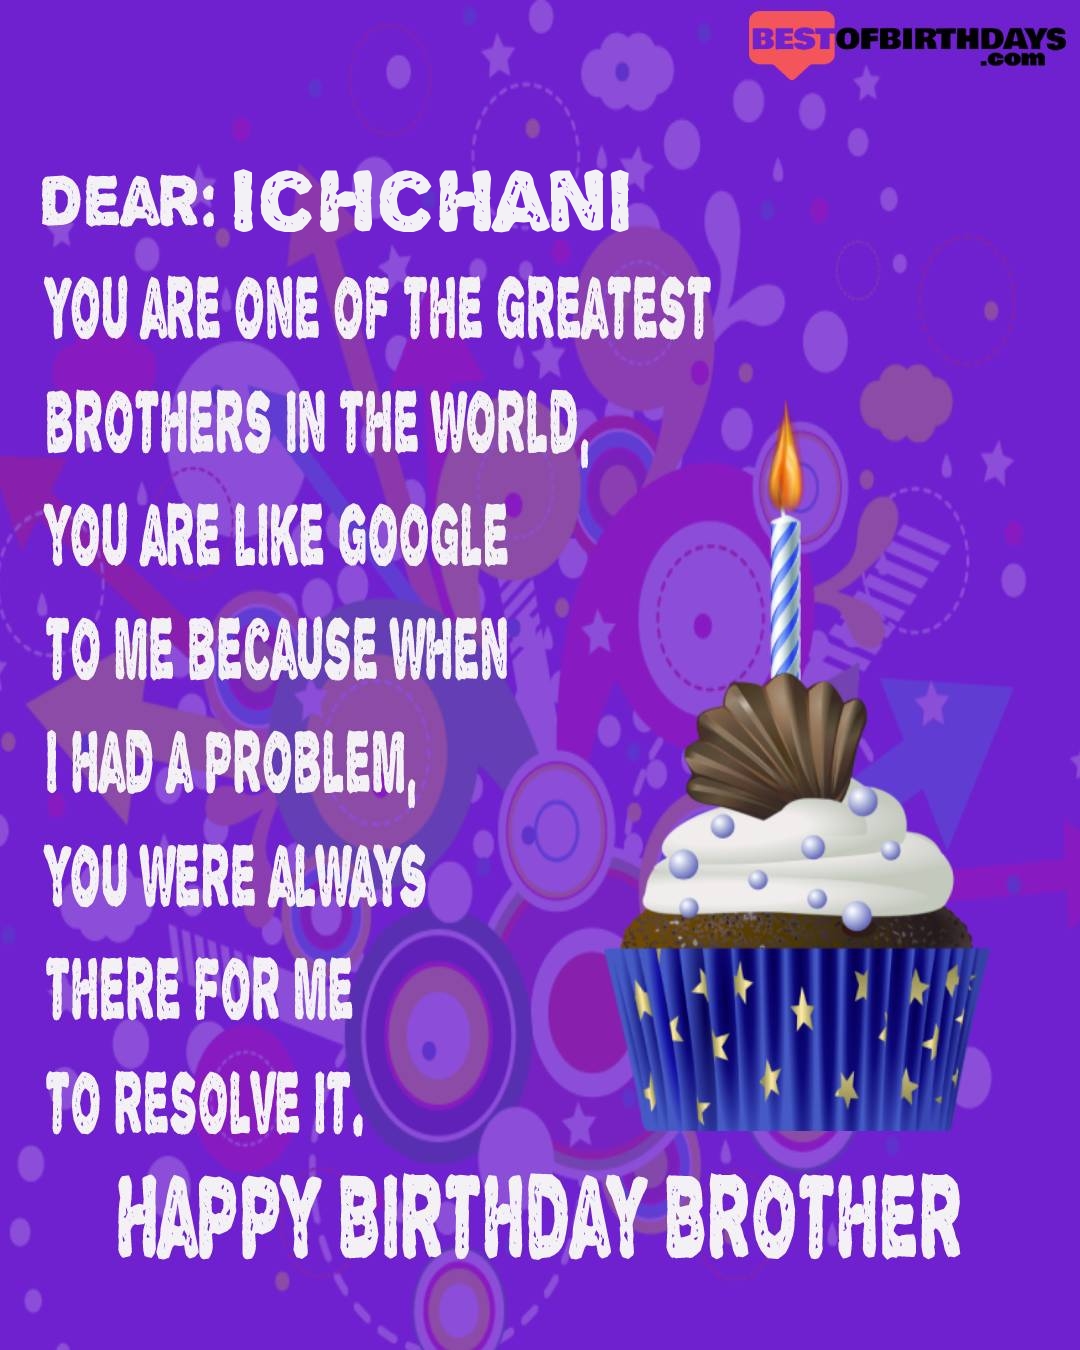 Happy birthday ichchani bhai brother bro